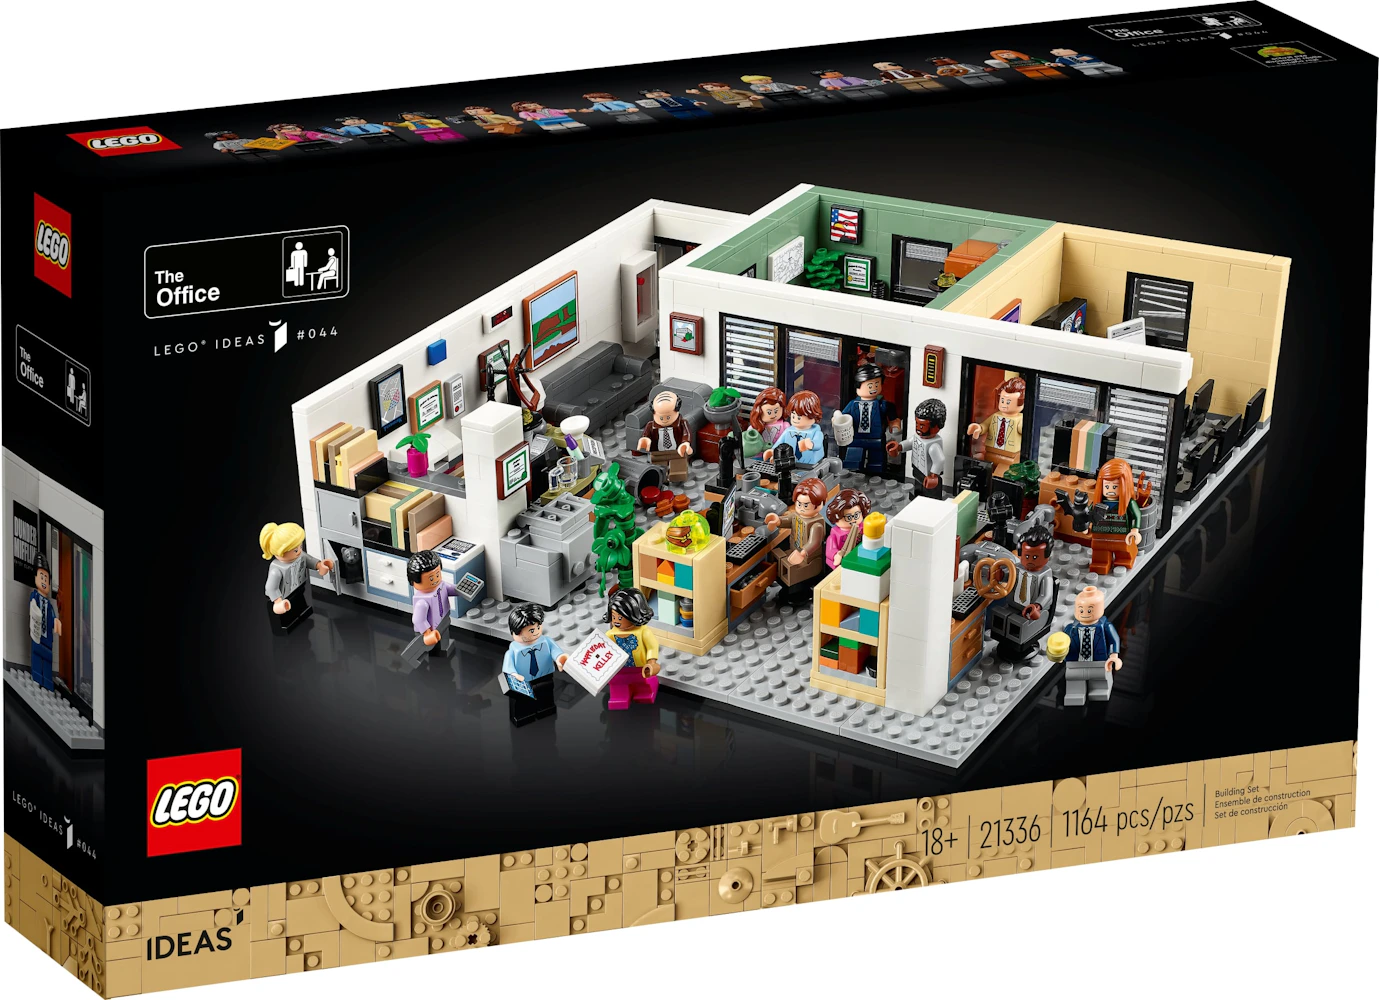 https://images.stockx.com/images/LEGO-Ideas-The-Office-Set-21336.jpg?fit=fill&bg=FFFFFF&w=700&h=500&fm=webp&auto=compress&q=90&dpr=2&trim=color&updated_at=1658432781